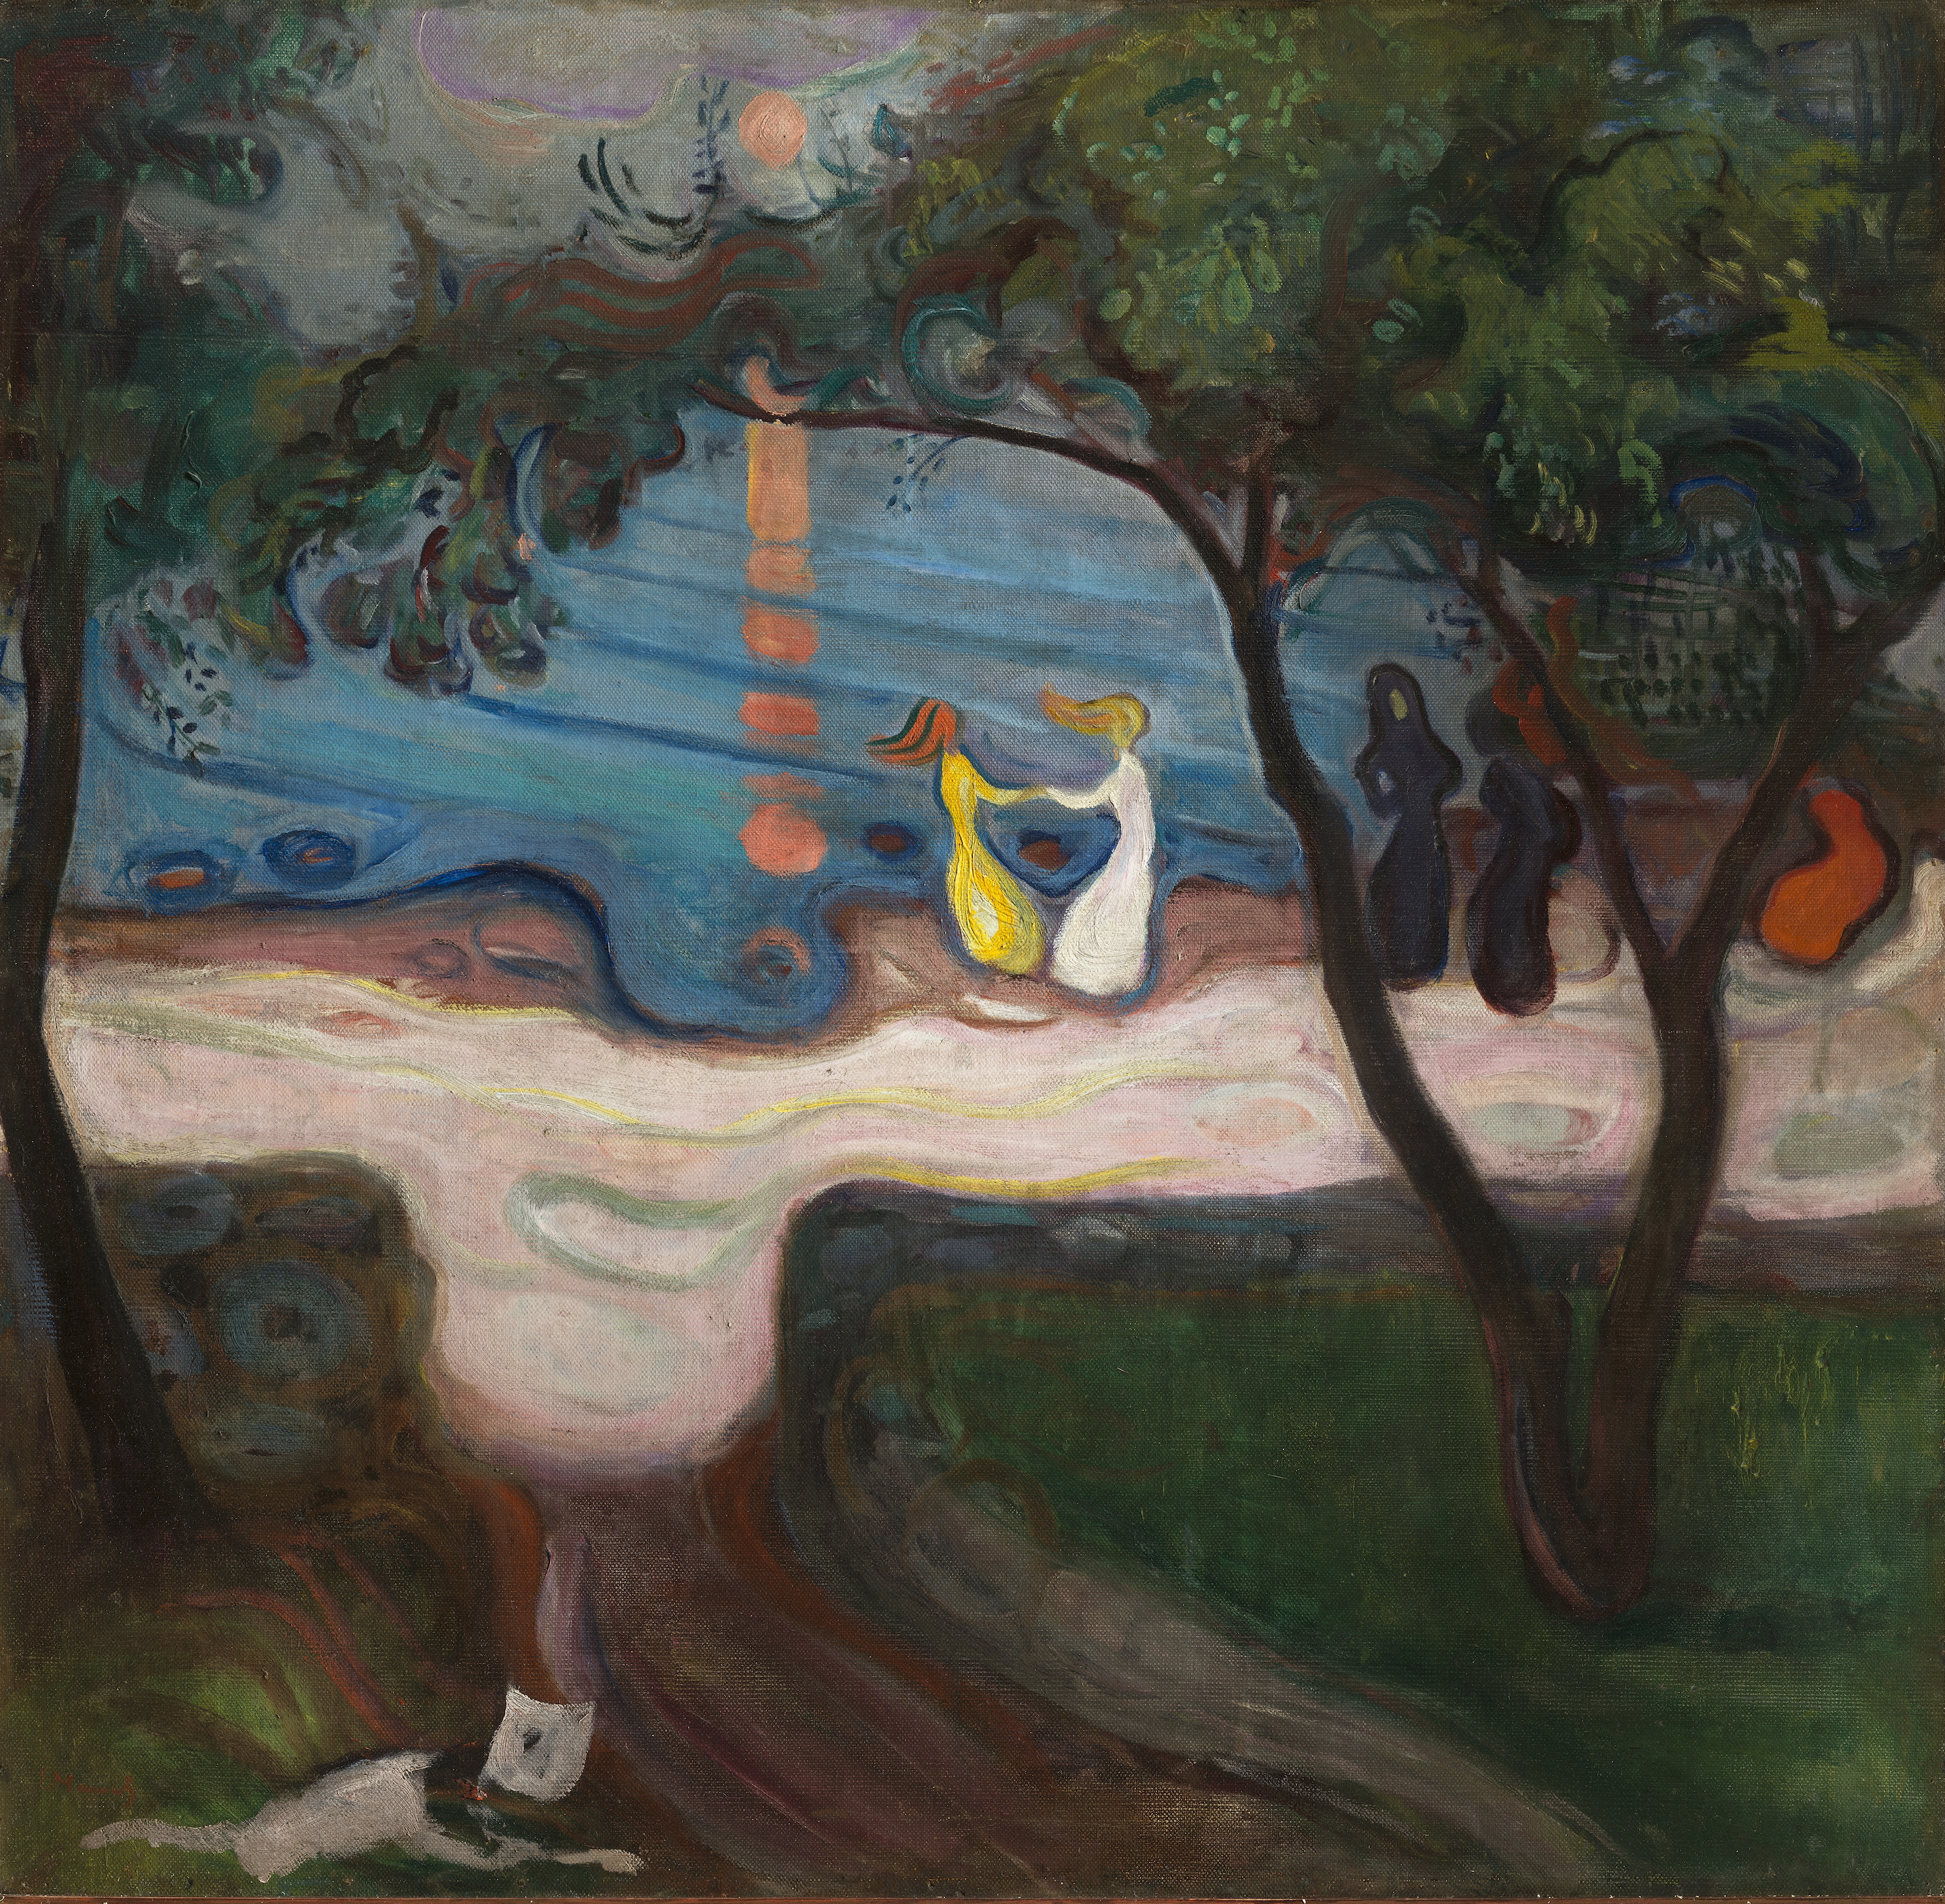 Танец на пляже (Dancing on a Shore) by Edvard Munch - 1900 - 95,5 x 98,5 см 